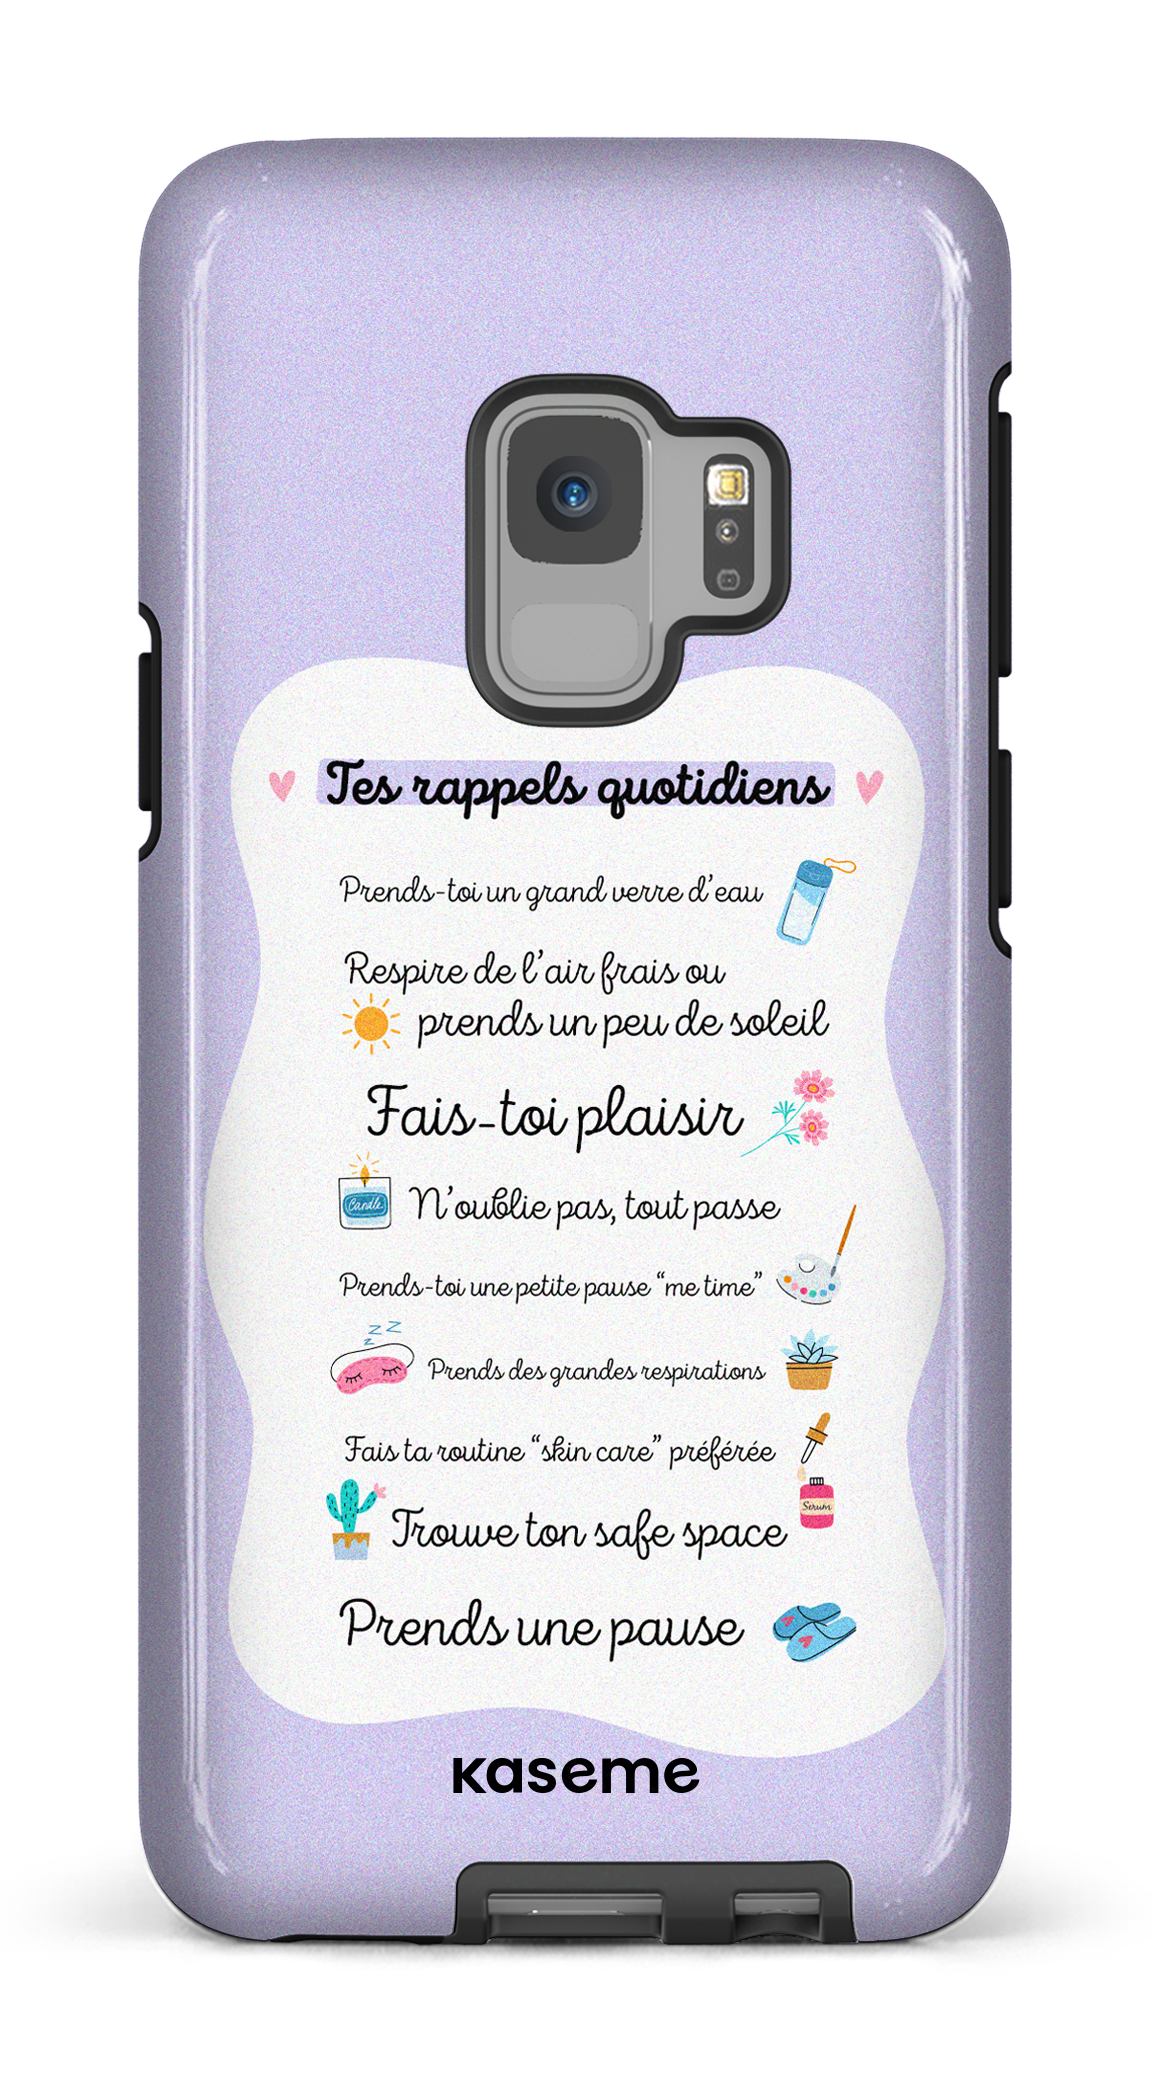 Tes rappels quotidiens purple - Galaxy S9